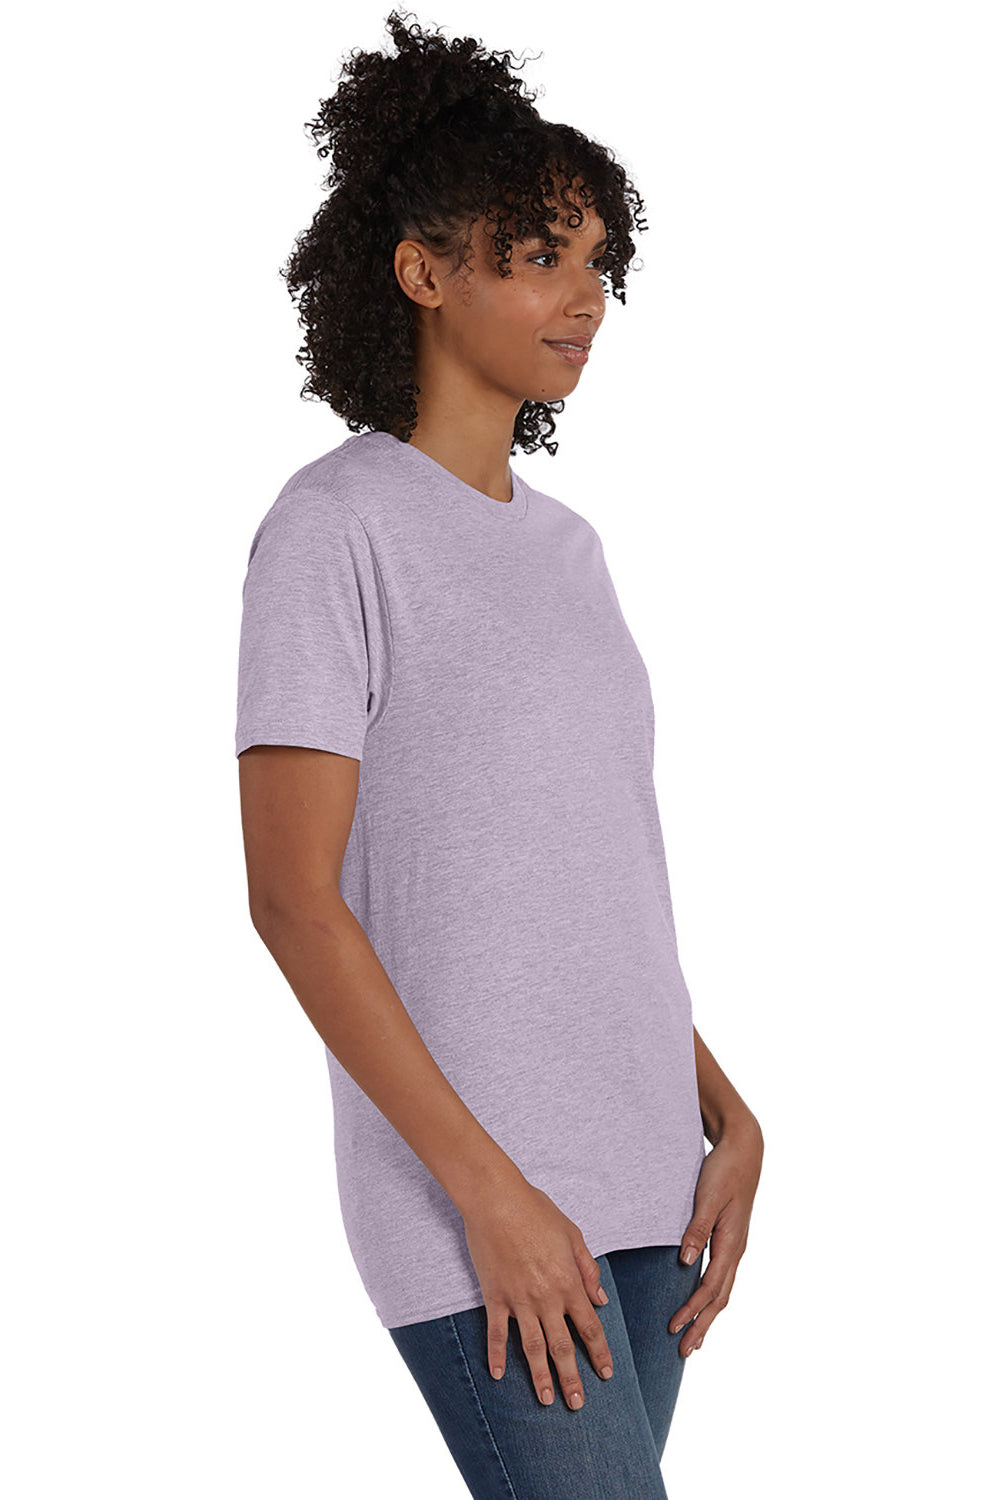 Hanes 4980 Mens Nano-T Short Sleeve Crewneck T-Shirt Marbled Pale Violet 3Q